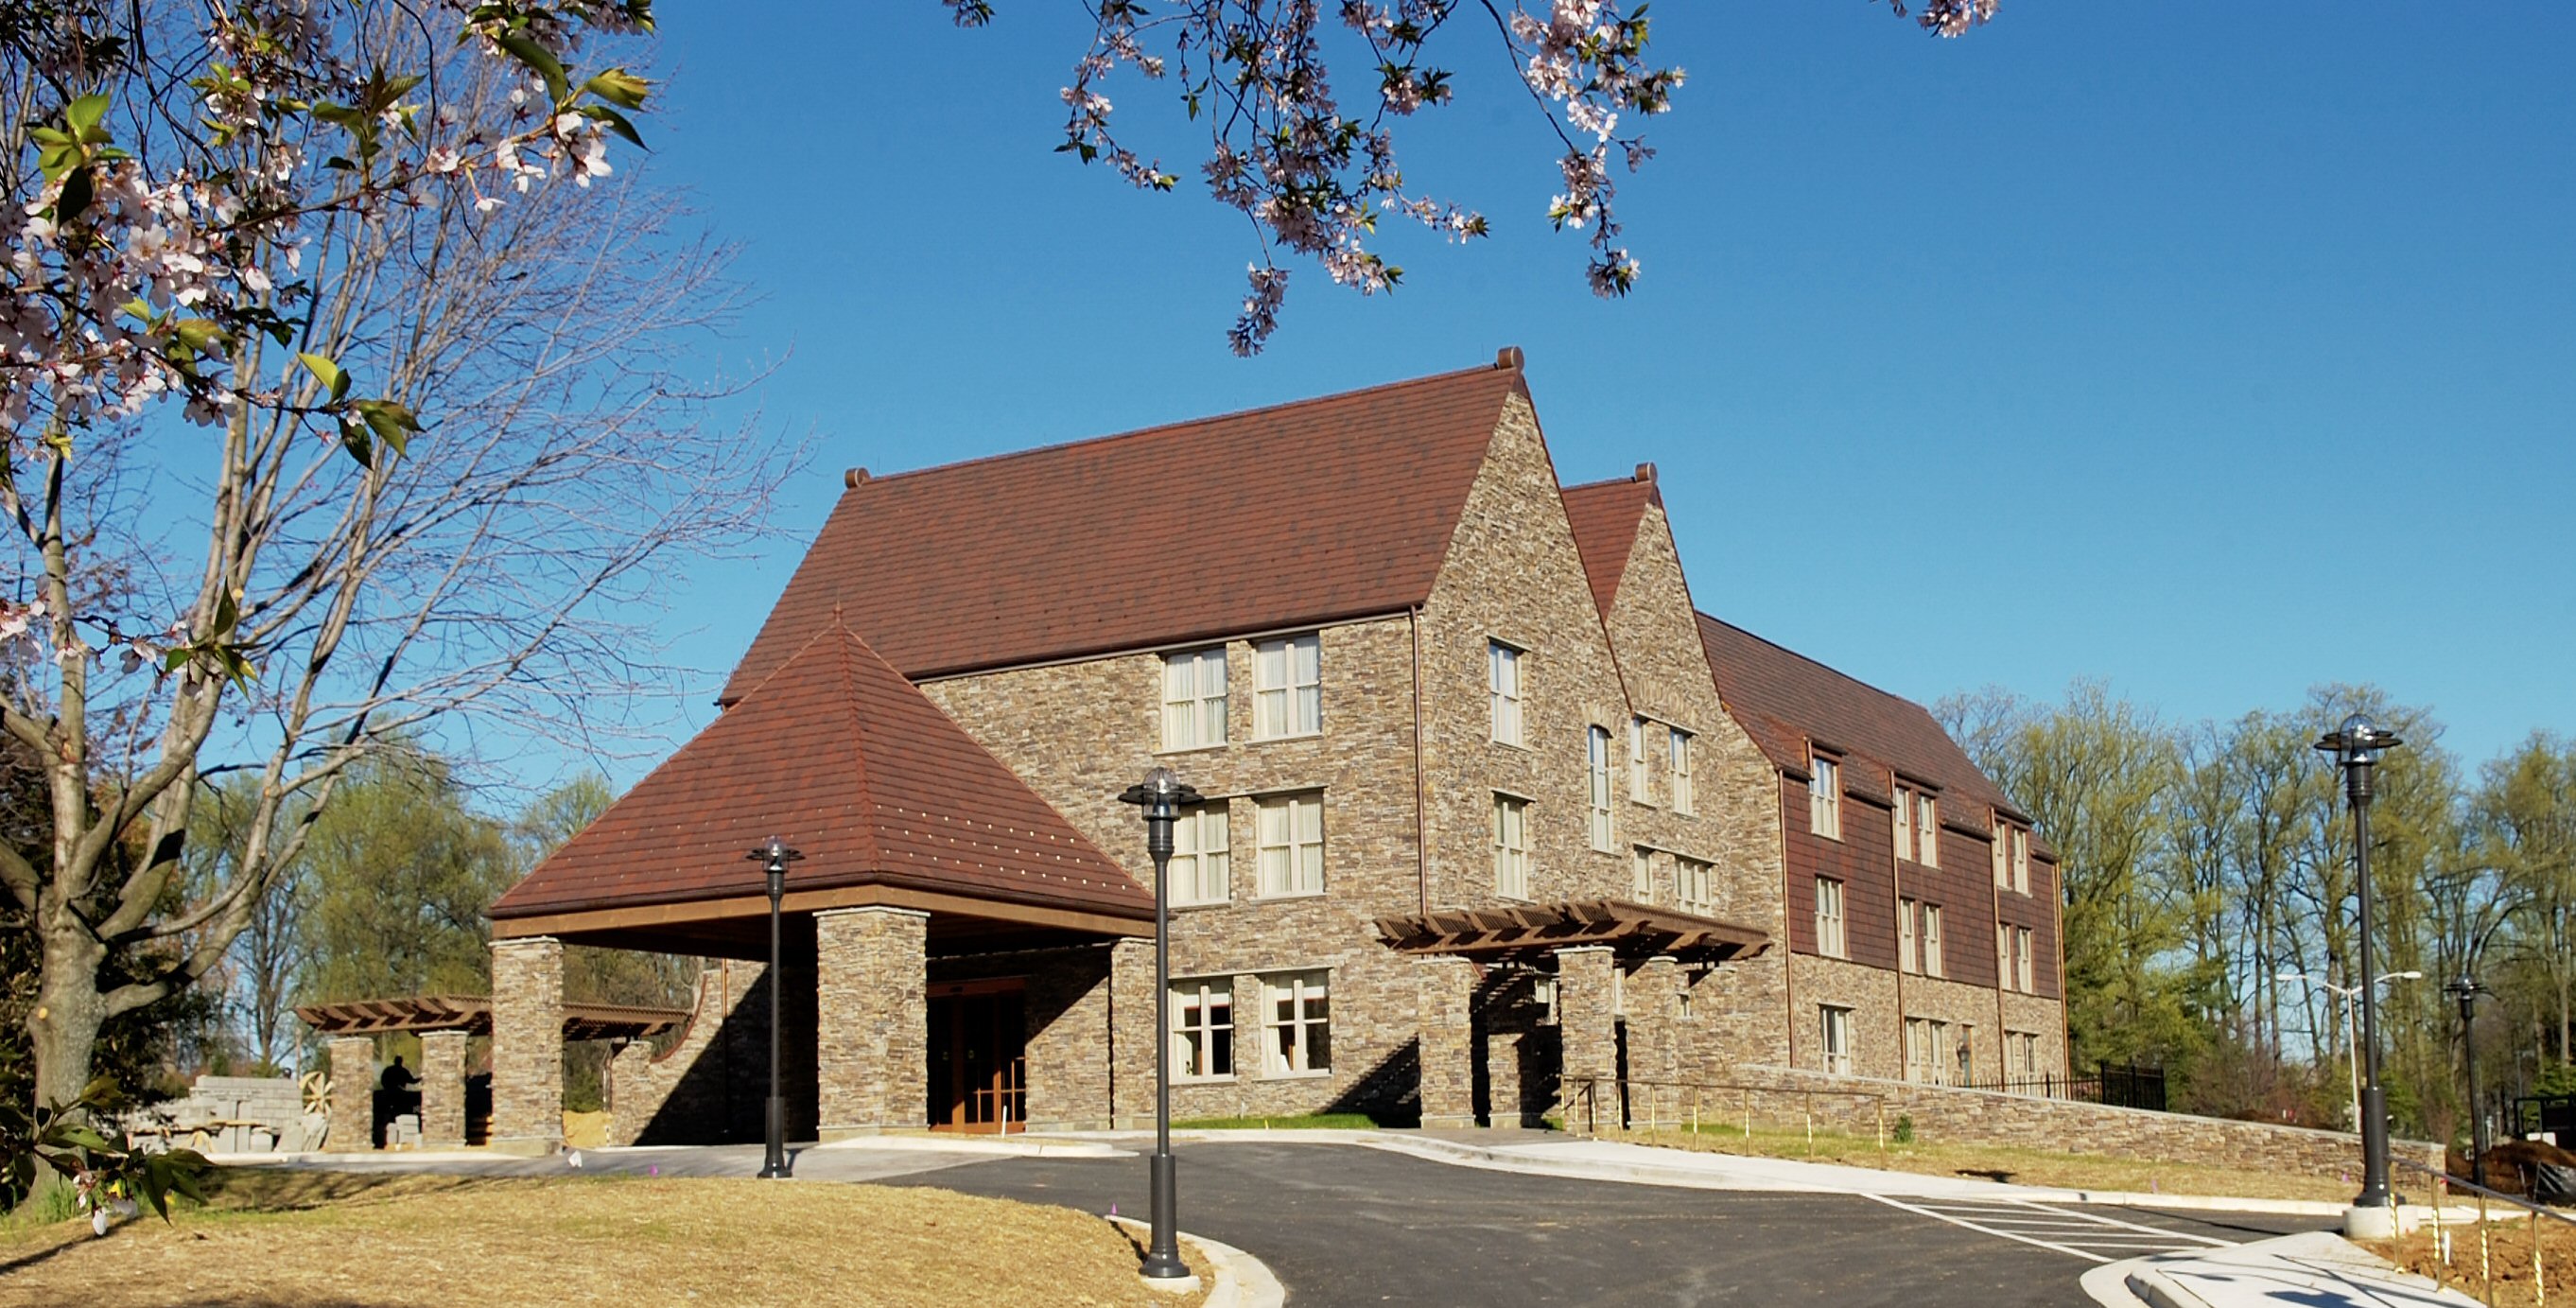 External view of the Edmond J. Safra Family Lodge at NIH